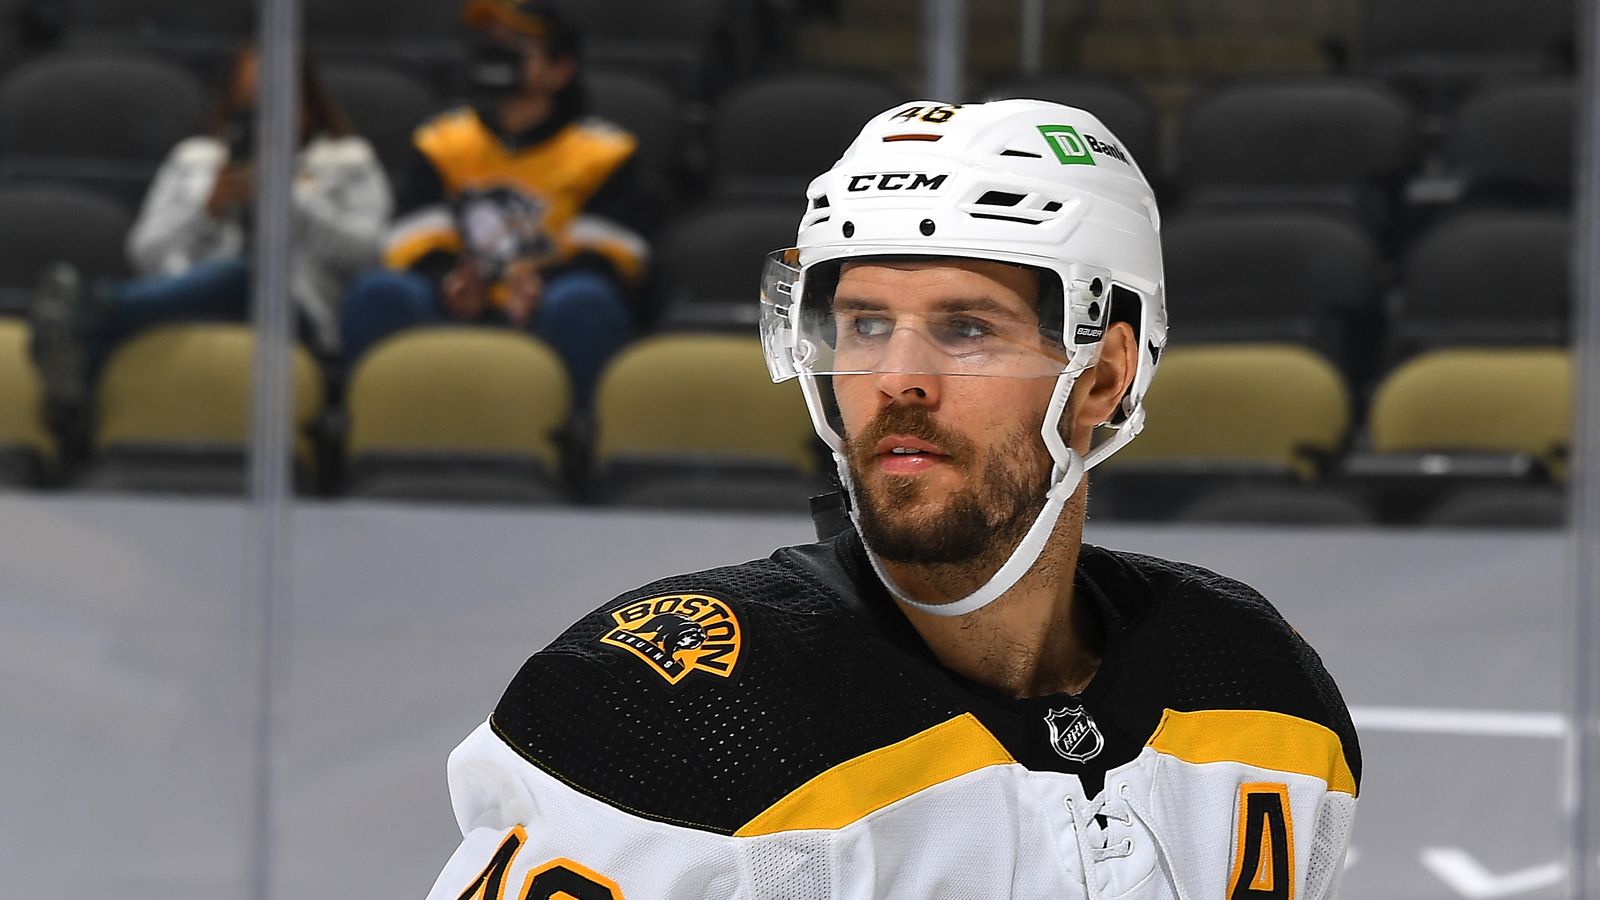 Boston Bruins - David Krejci is playing in his 900th NHL